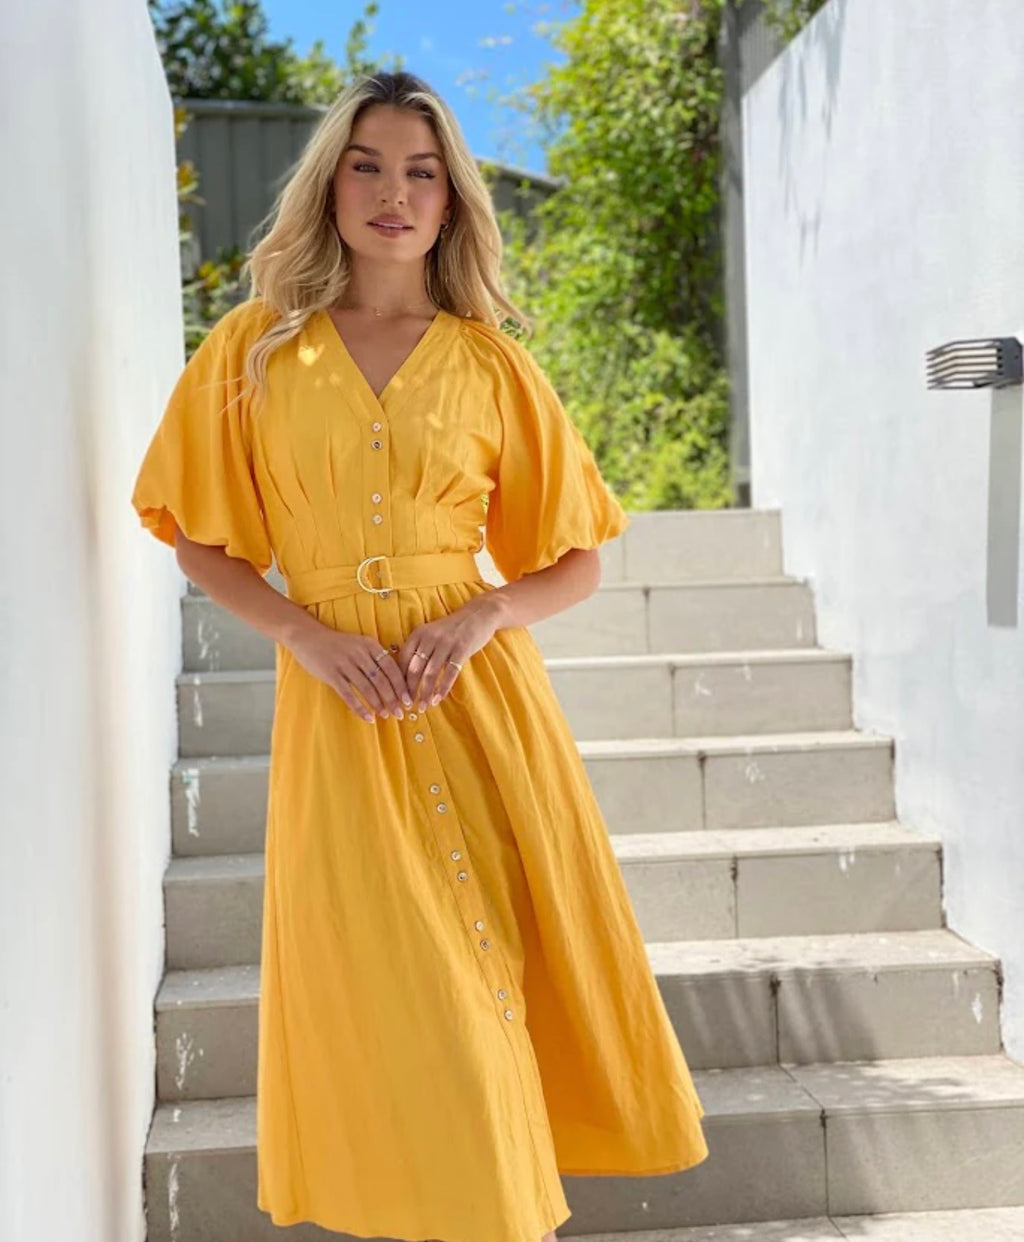 The Gia dress in yellow